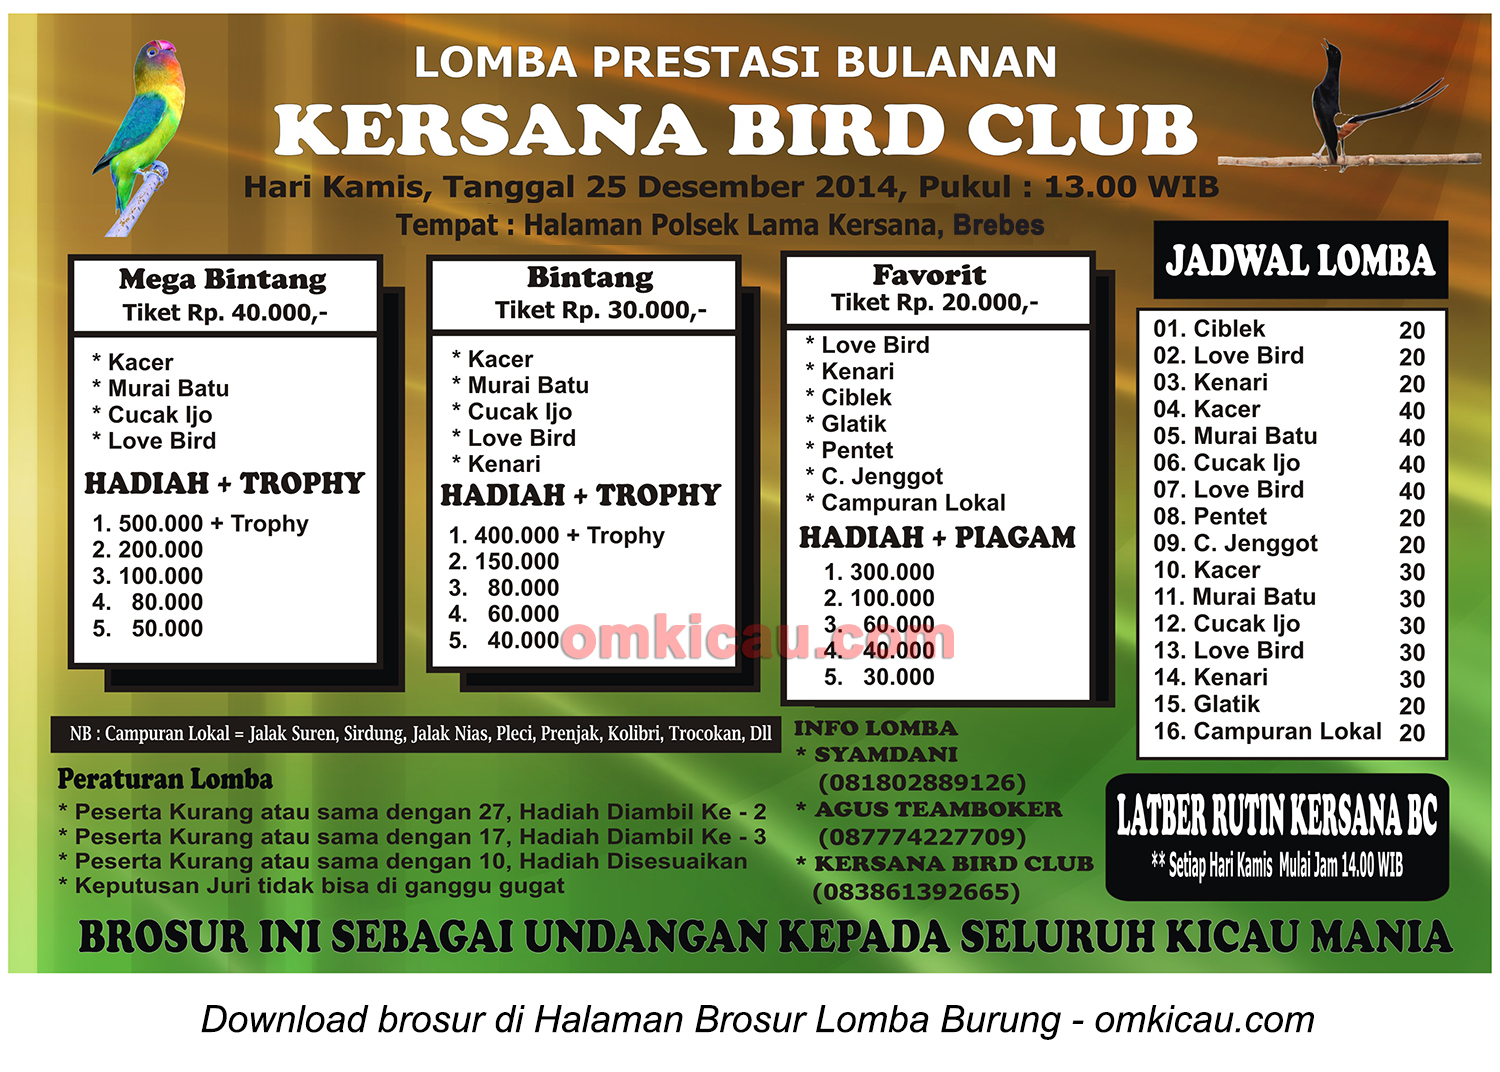 Brosur Latpres Bulanan Kersana BC, Brebes, 25 Desember 2014